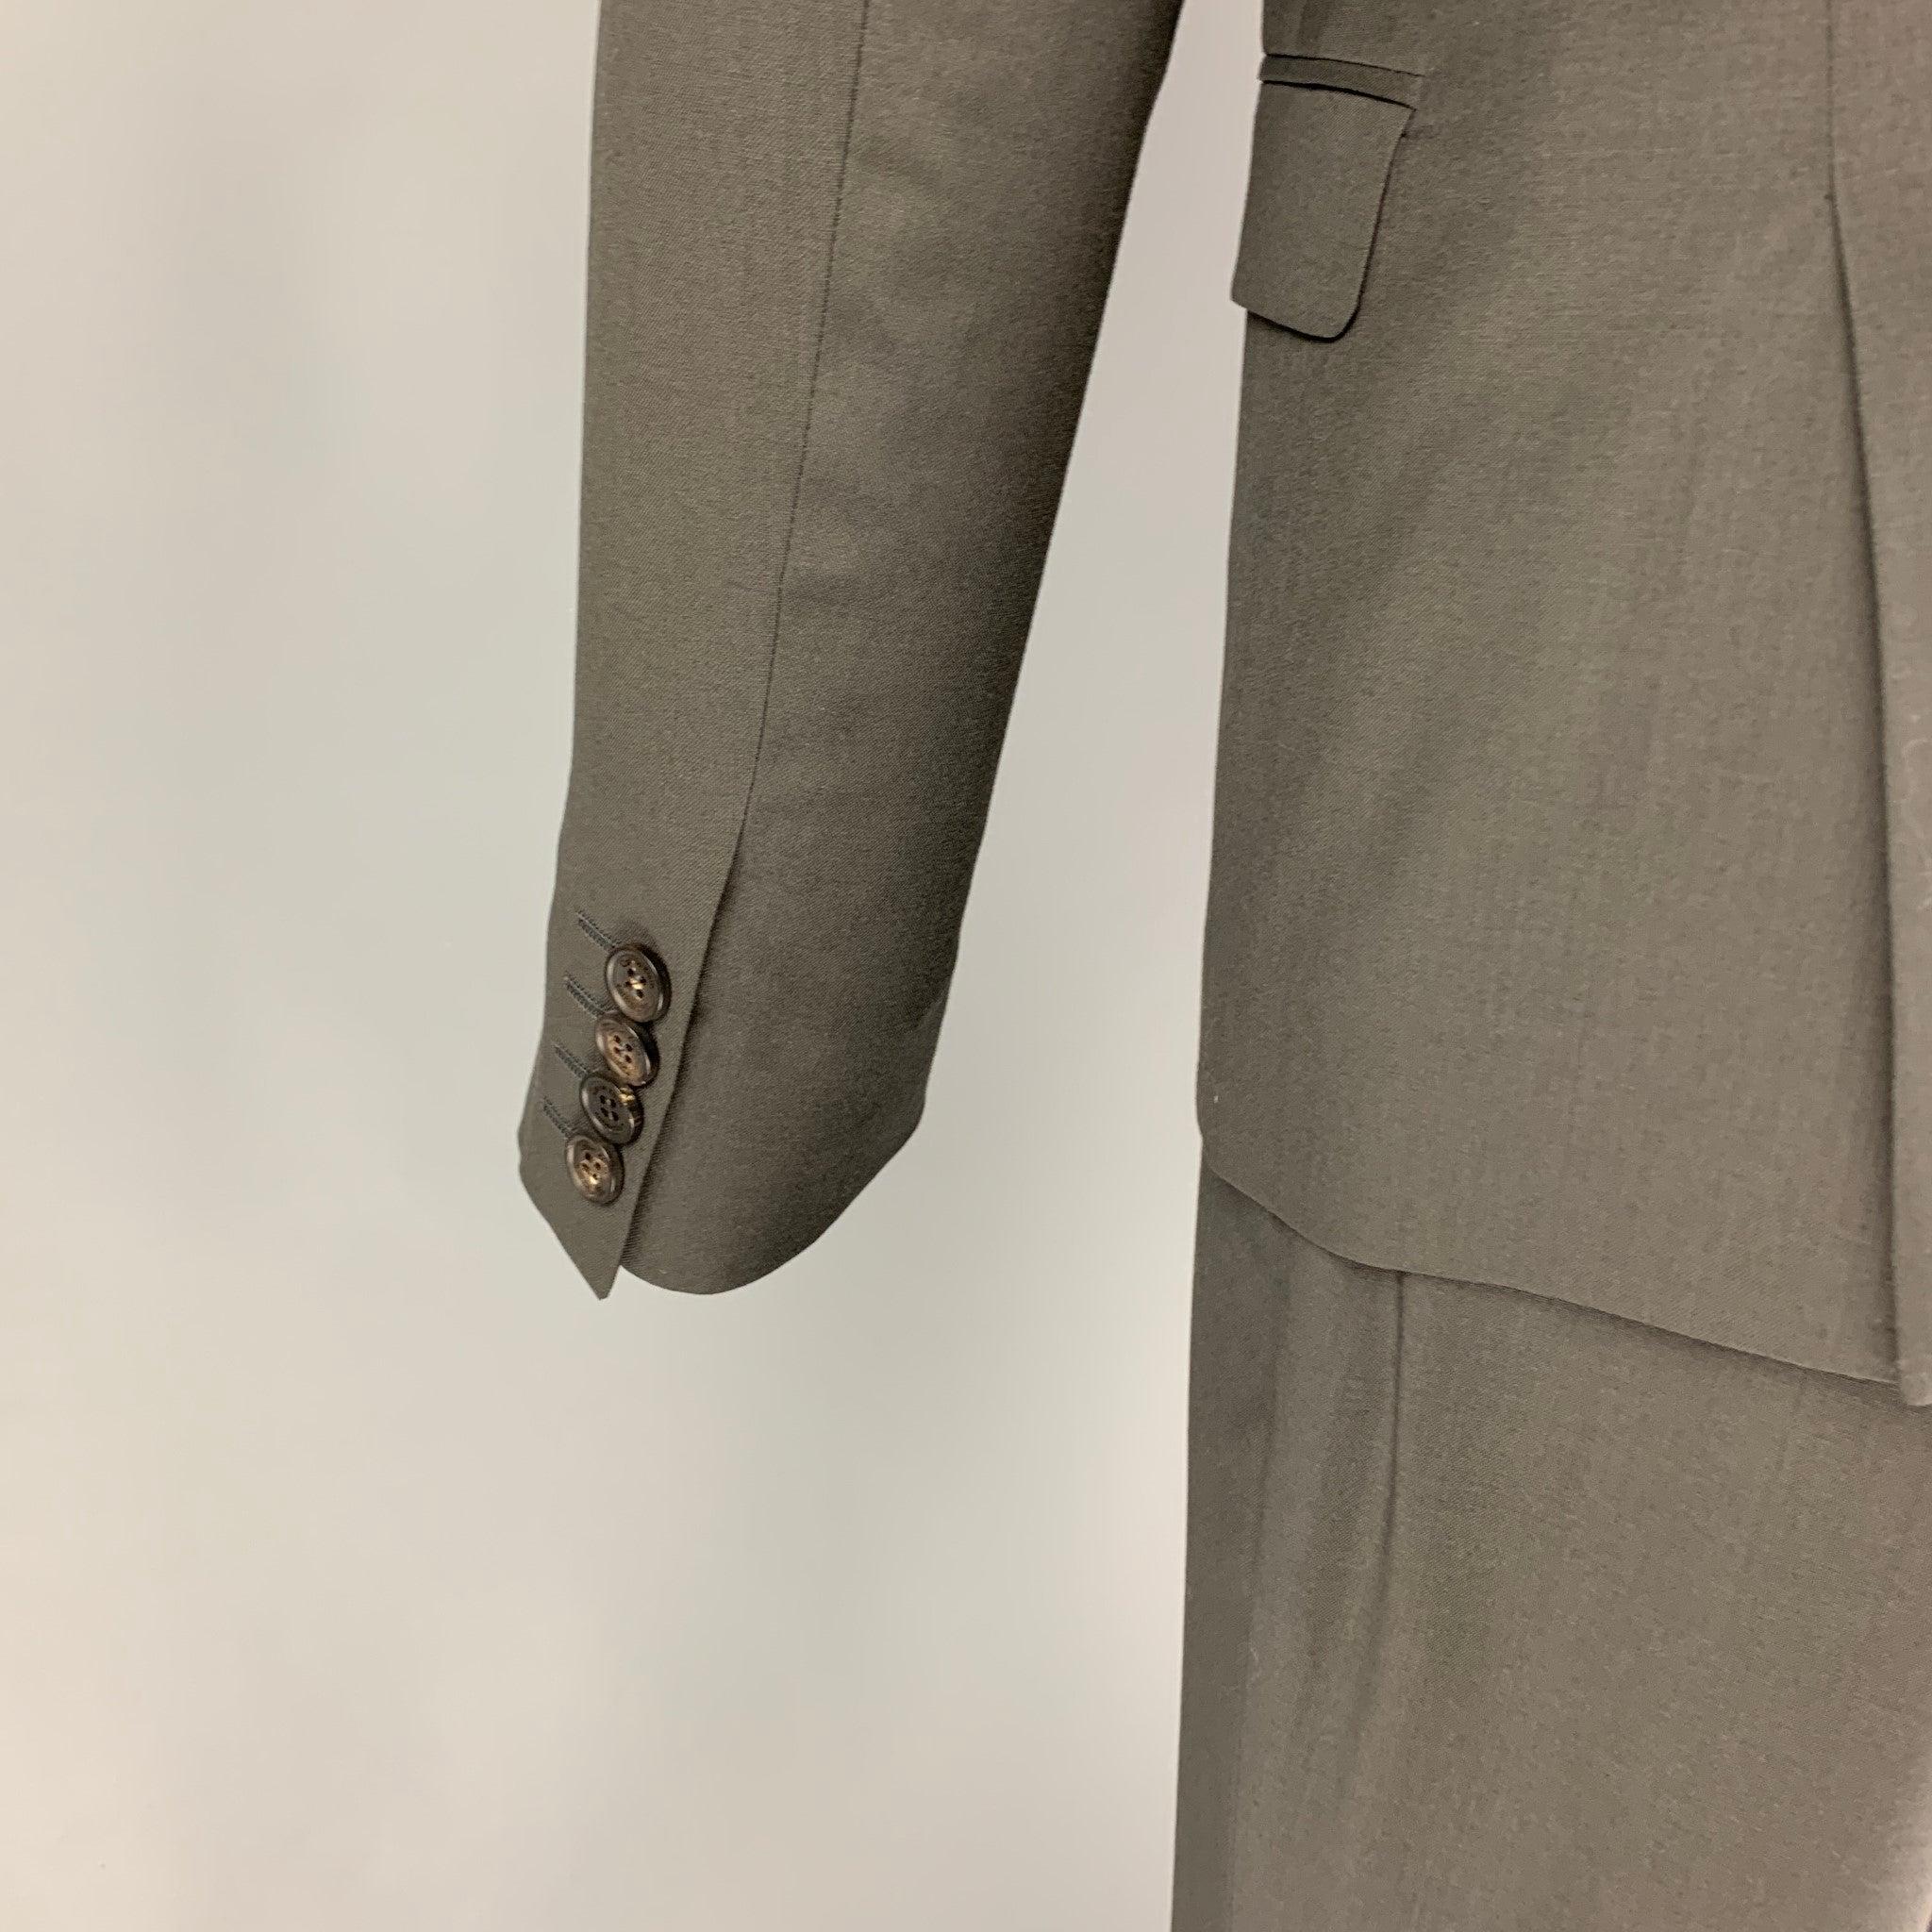 CALVIN KLEIN COLLECTION Size 36 Charcoal Wool Notch Lapel Suit For Sale 1